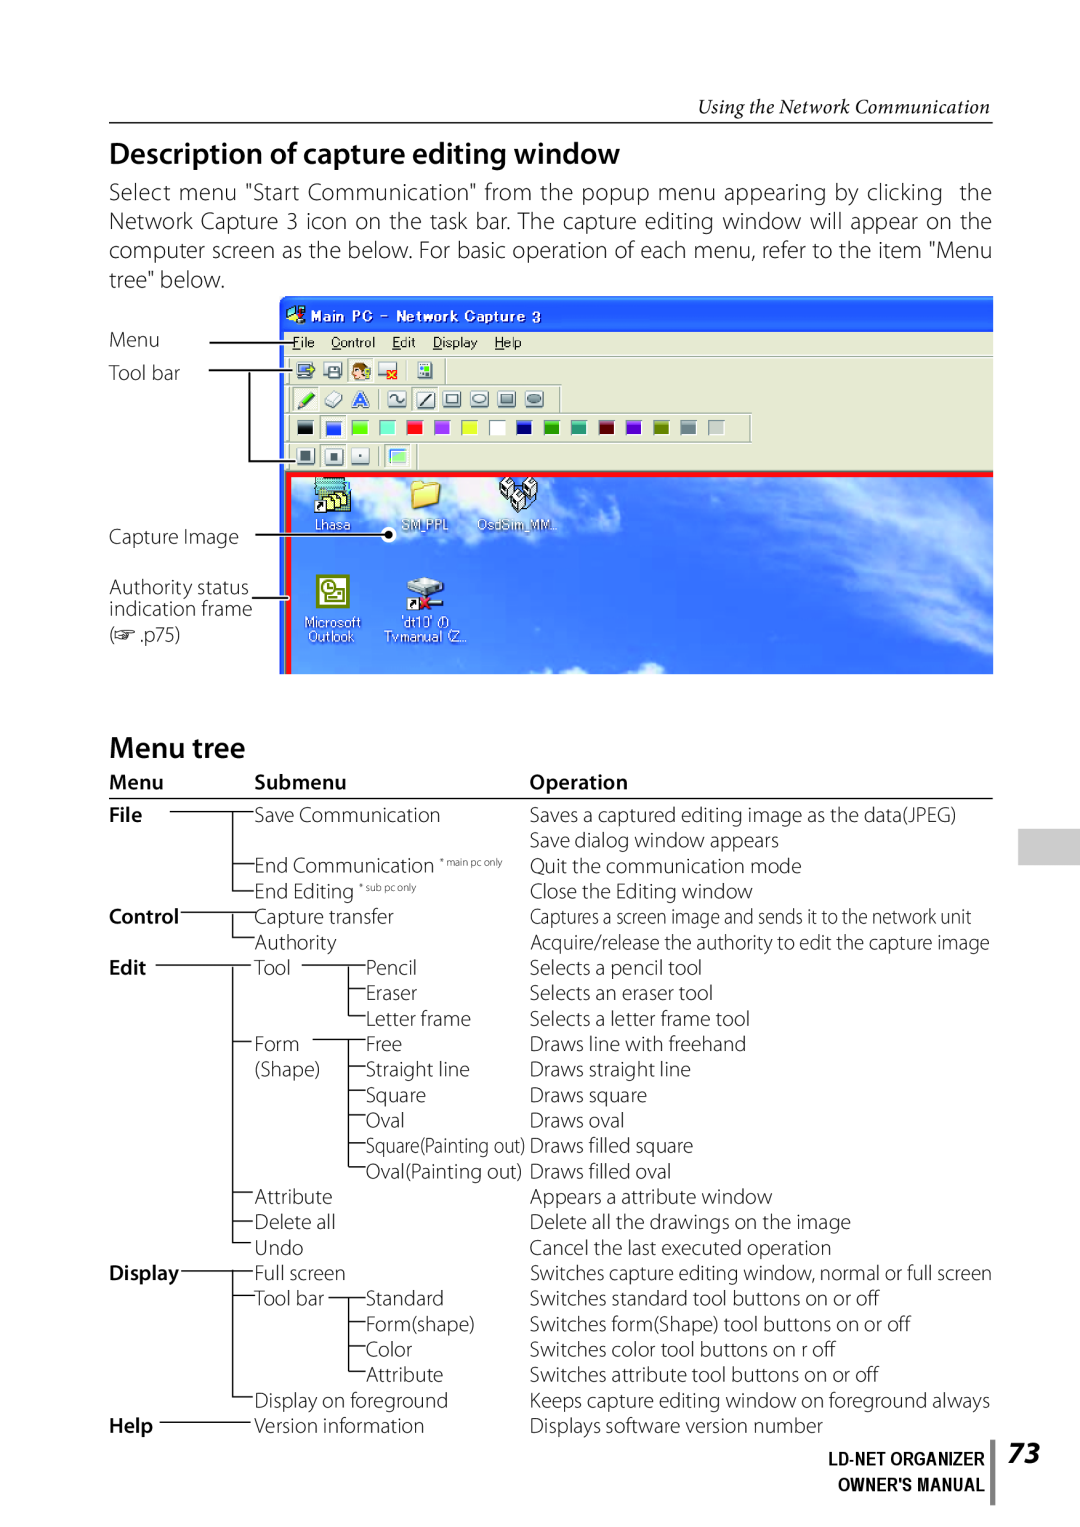 Sanyo POA-LN02 Description of capture editing window, Menu tree, Using the Network Communication, operation, File, Edit 